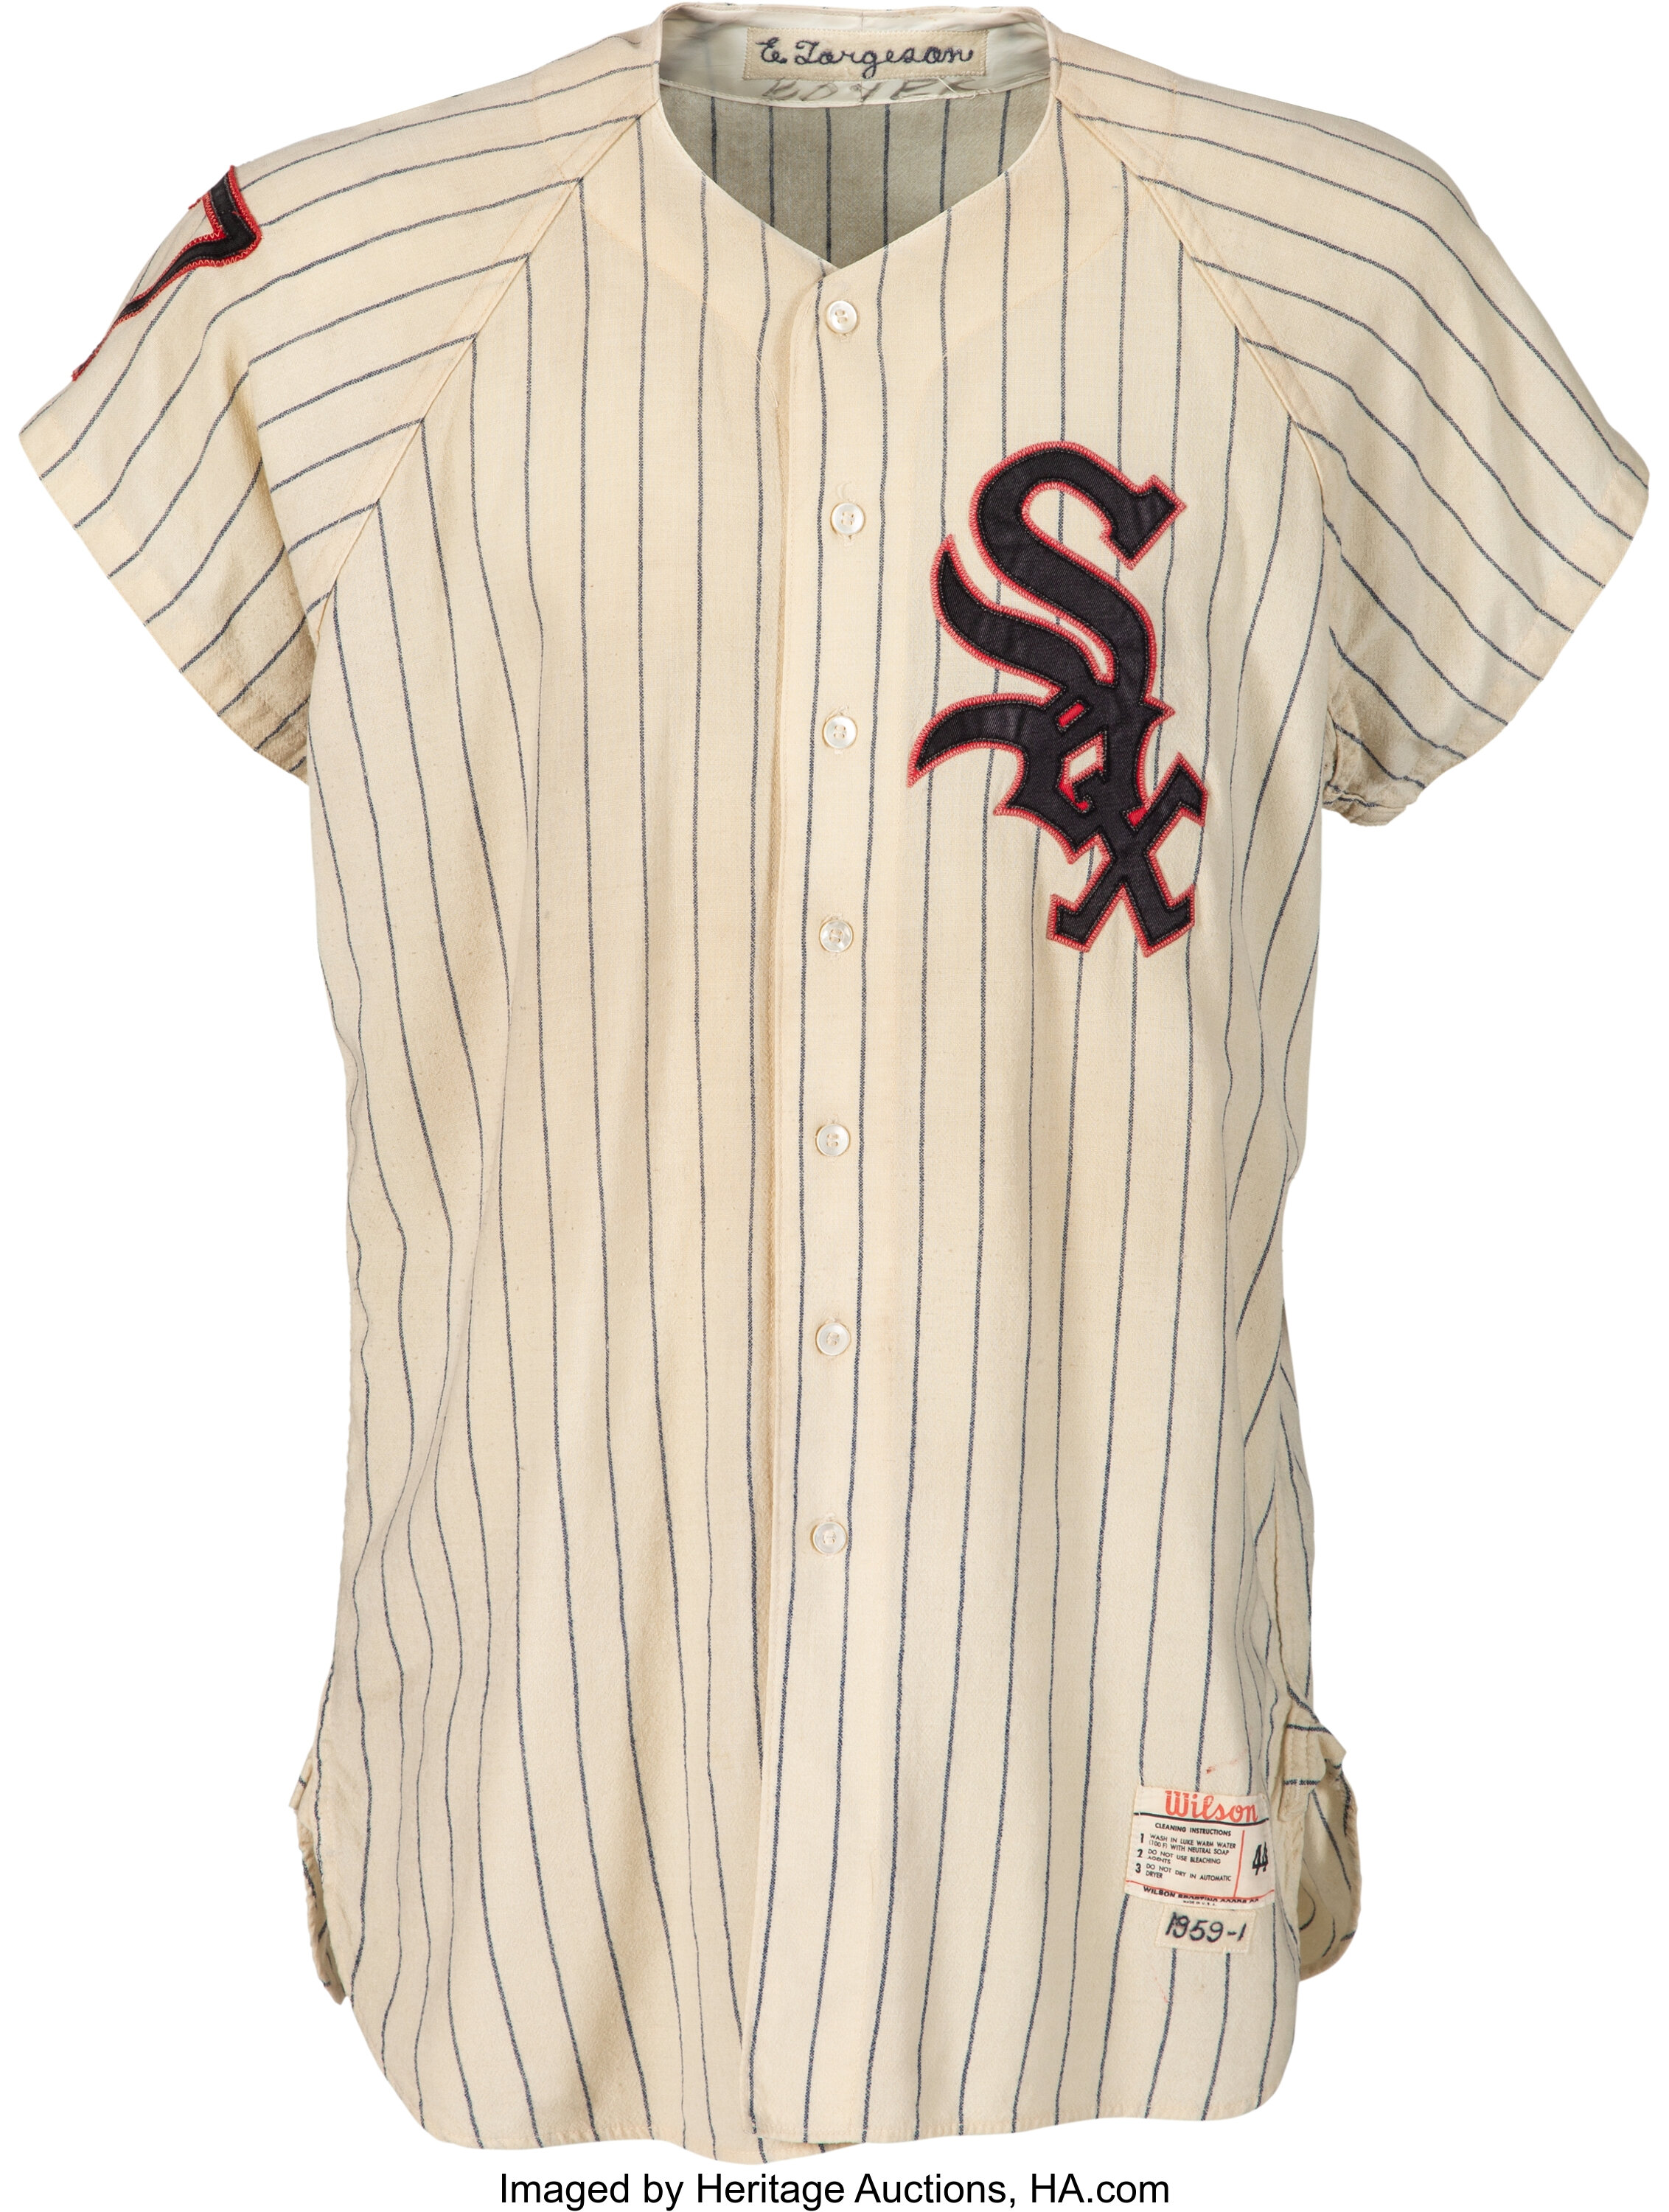 Vintage Chicago White Sox Baseball Jersey Designed & Sold By Nambcvt